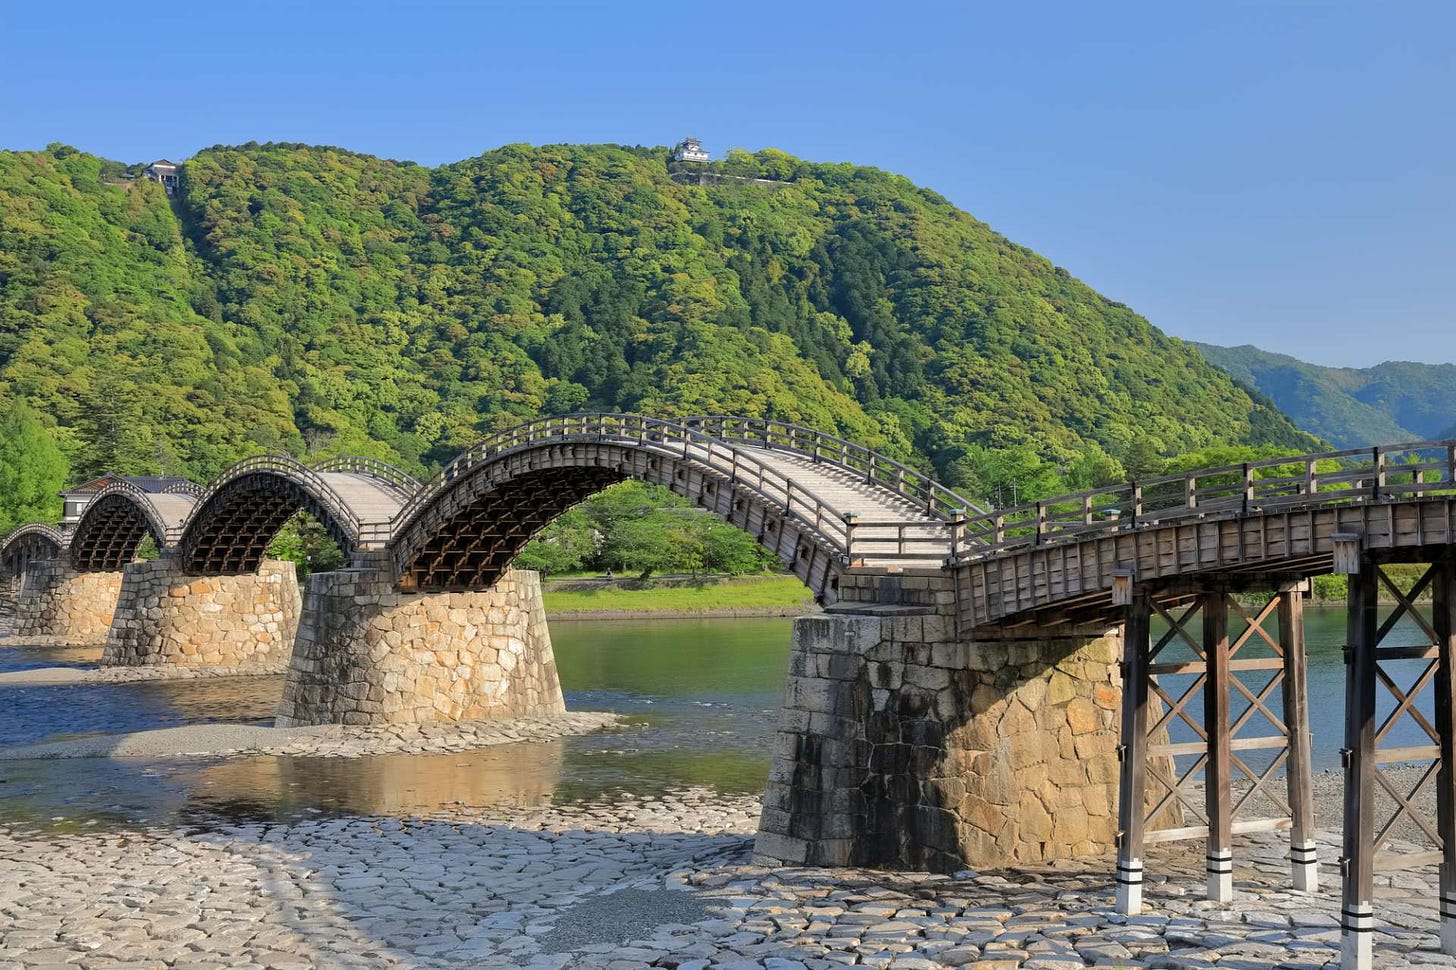 Kintai Bridge - Must-See Trip Plans, Access, Hours & Price | GOOD LUCK TRIP